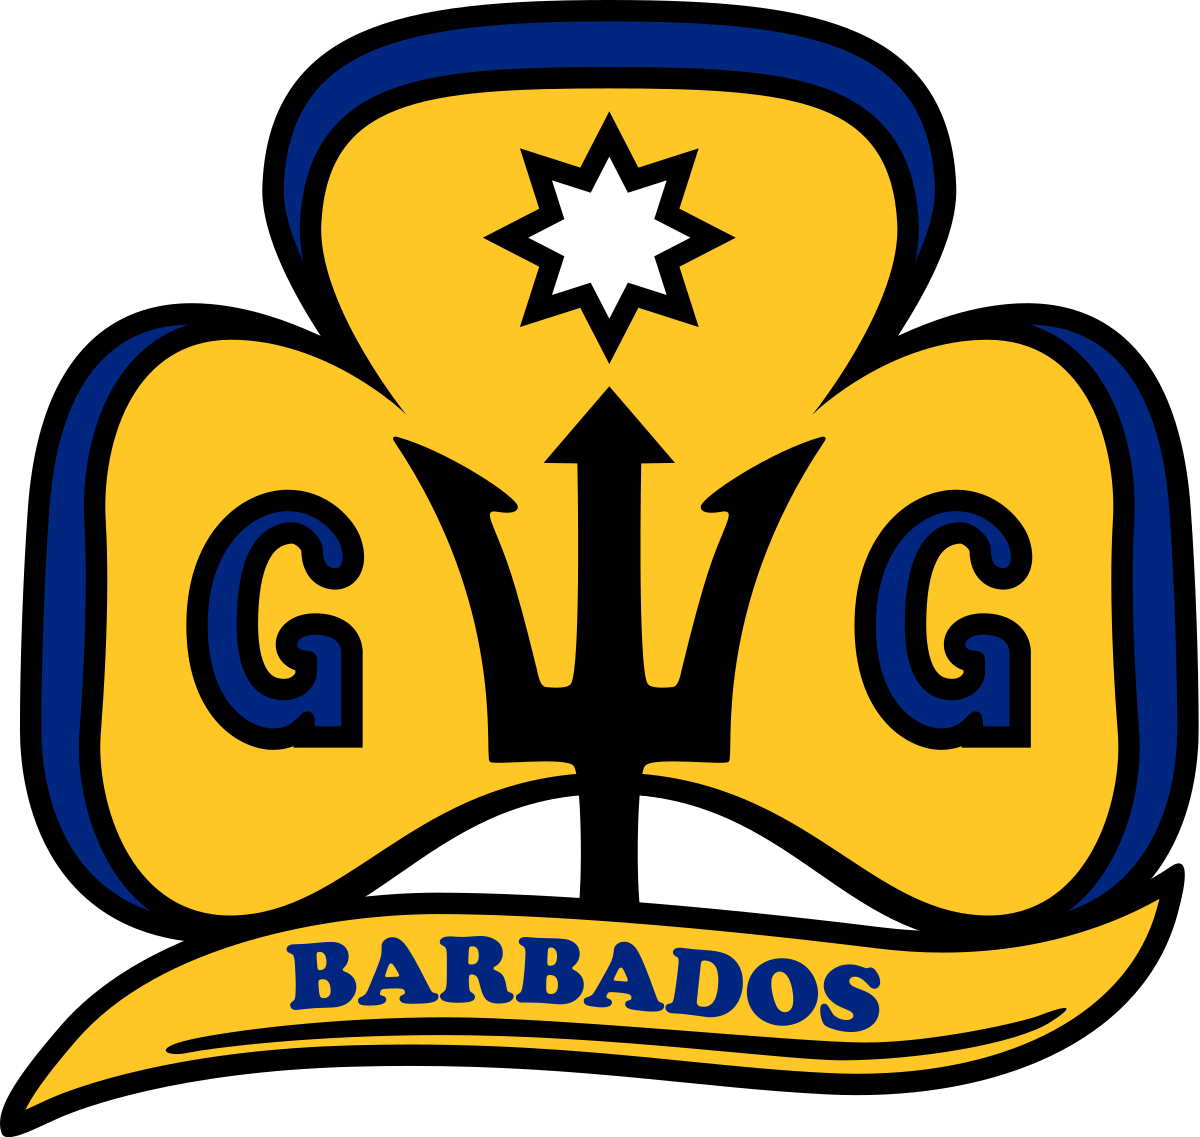 Girl Guides Association of Barbados